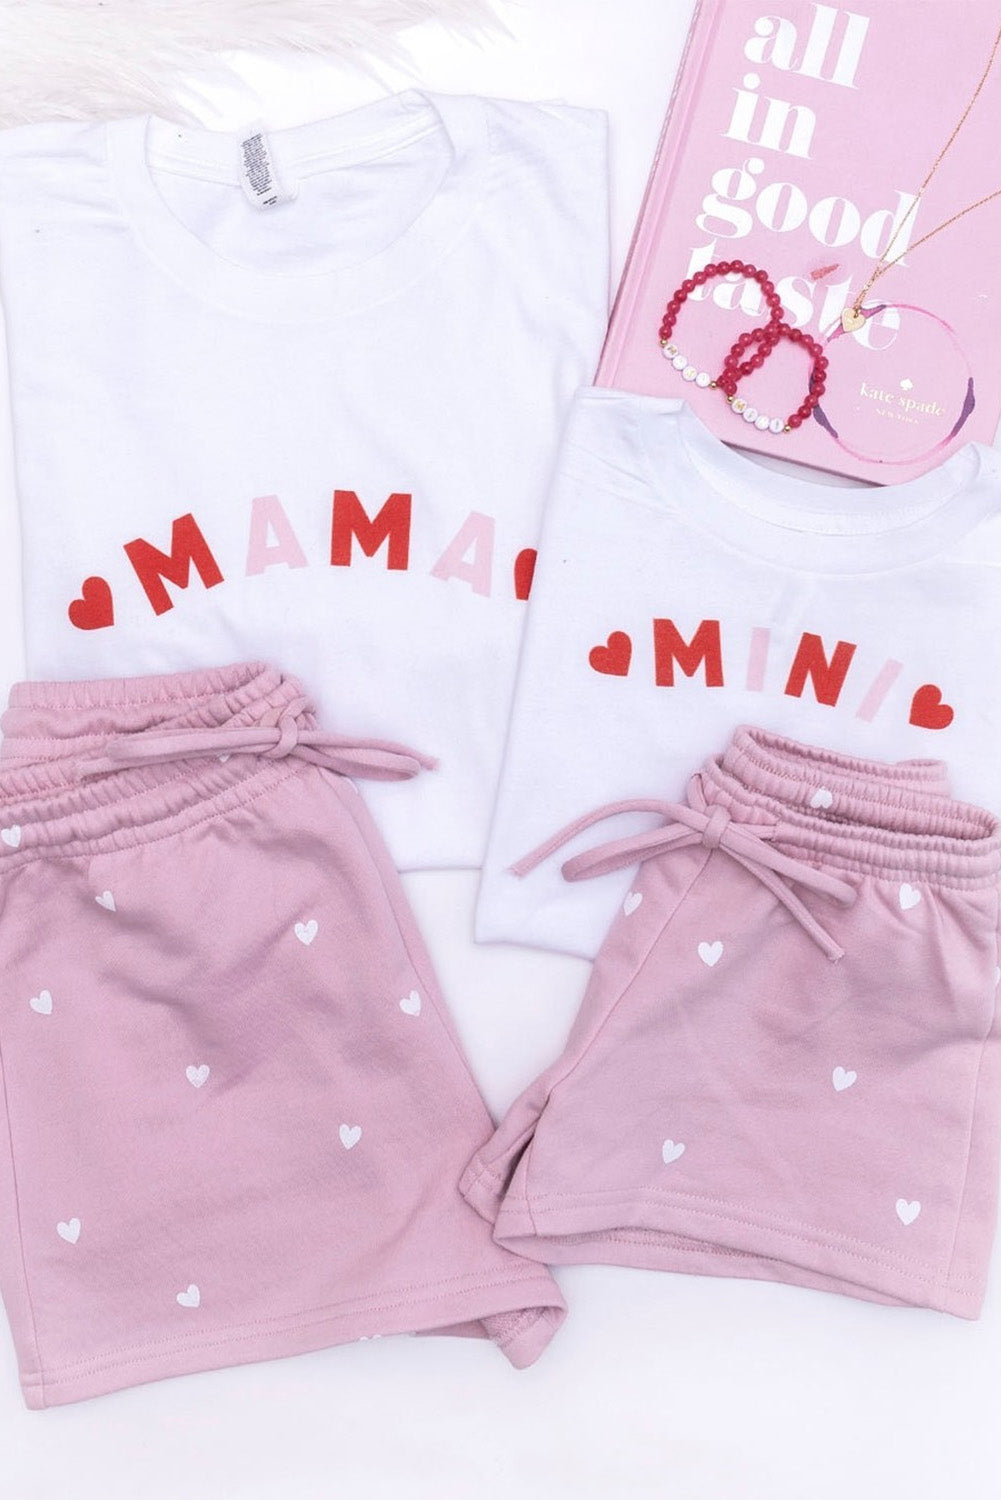 Pink Cute Heart Print Drawstring Lounge Shorts Casual Shorts JT's Designer Fashion